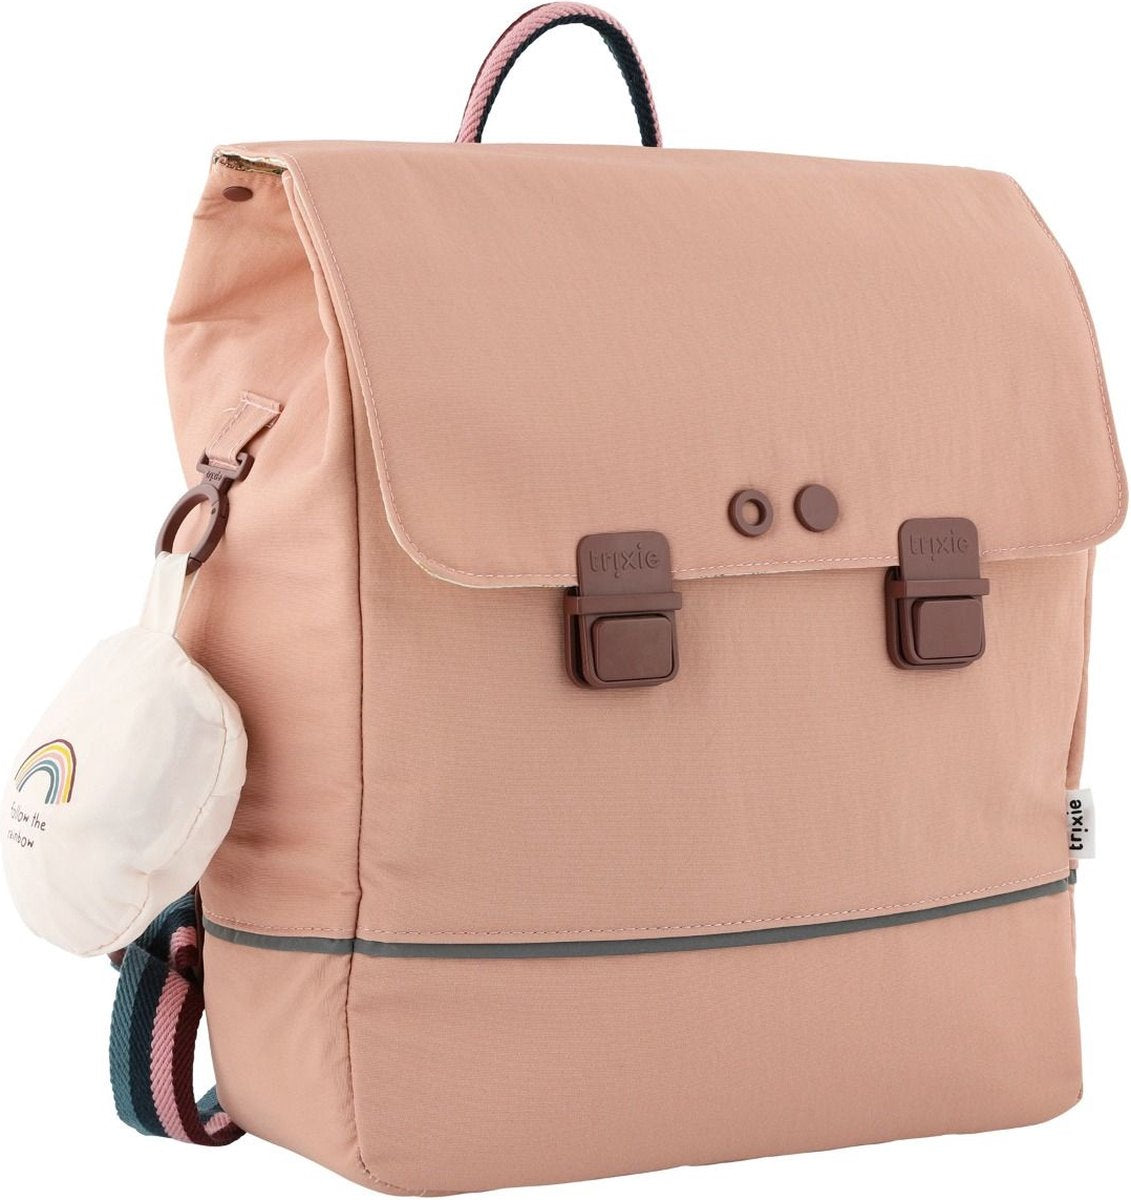 Trixie Baby school bag backpack - Rainbow